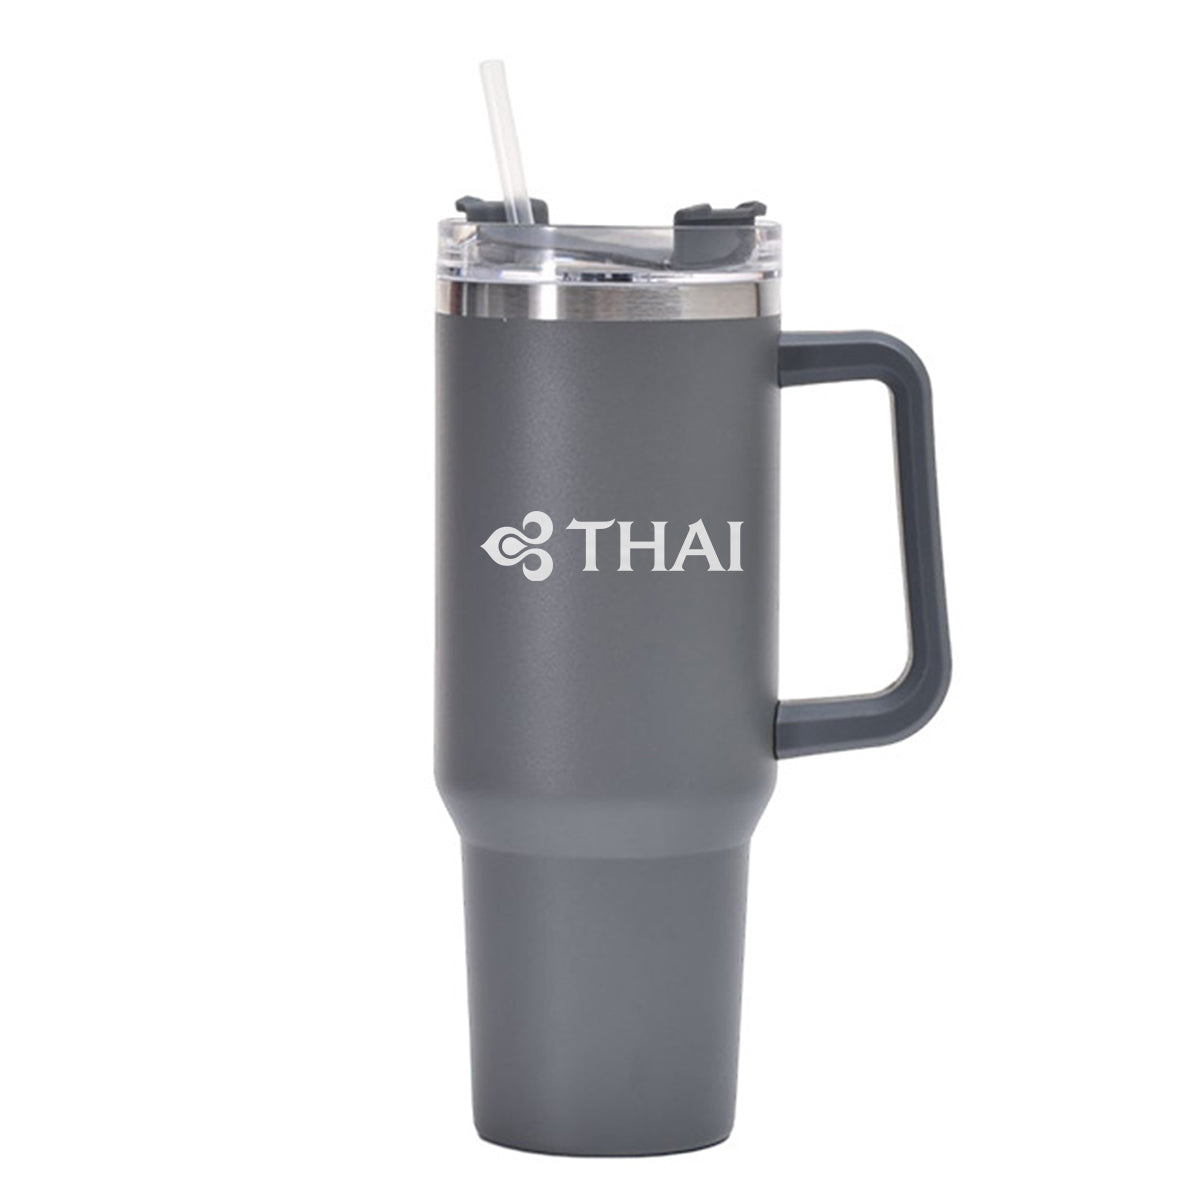 Thai Airways Designed 40oz Stainless Steel Car Mug With Holder